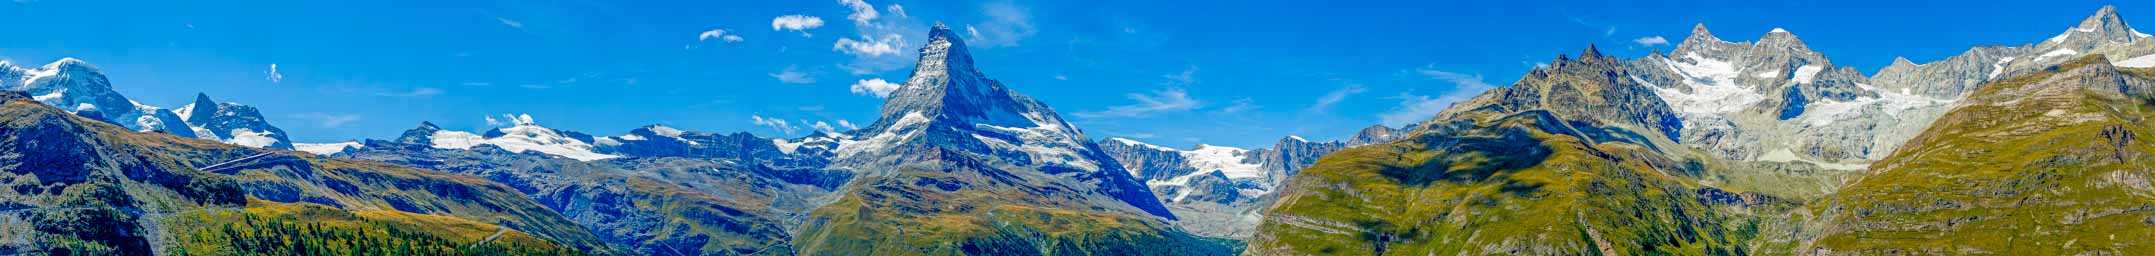 Matterhorn Panorama-256